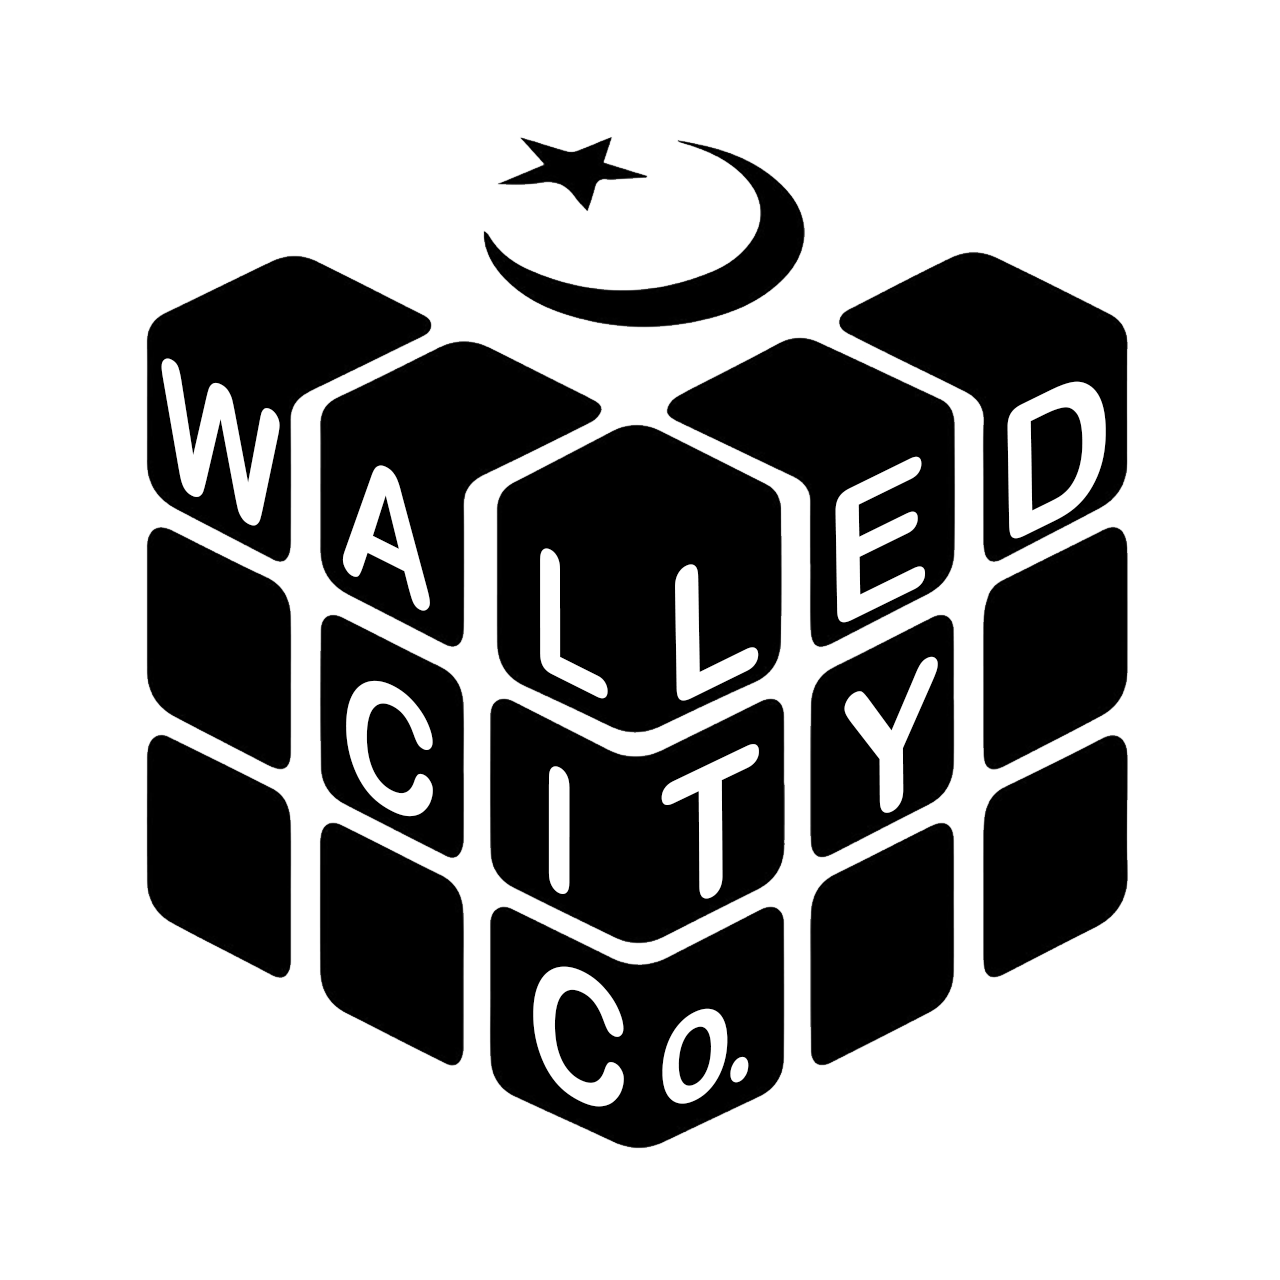 Walledcity logo